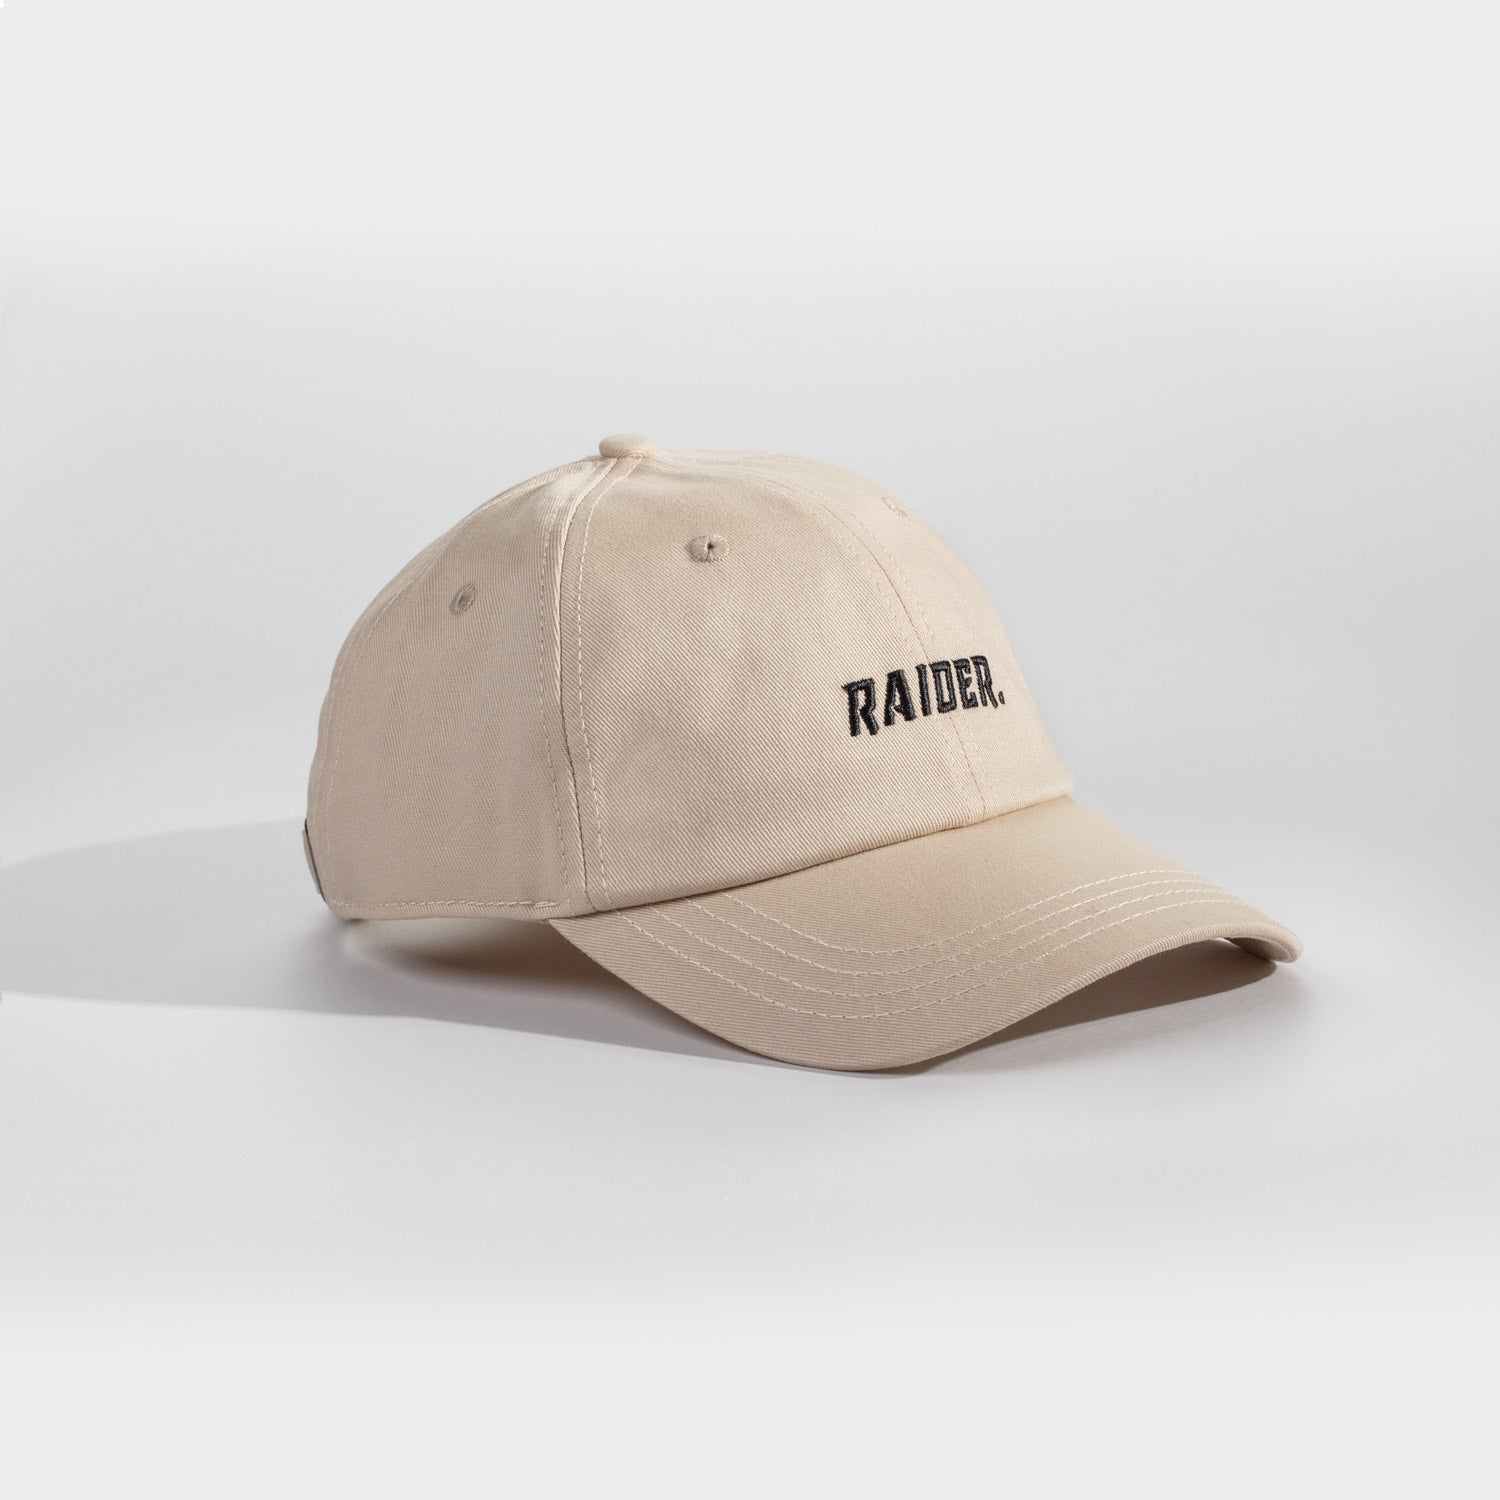 Raider Dad cap - Sandfärgad/svart